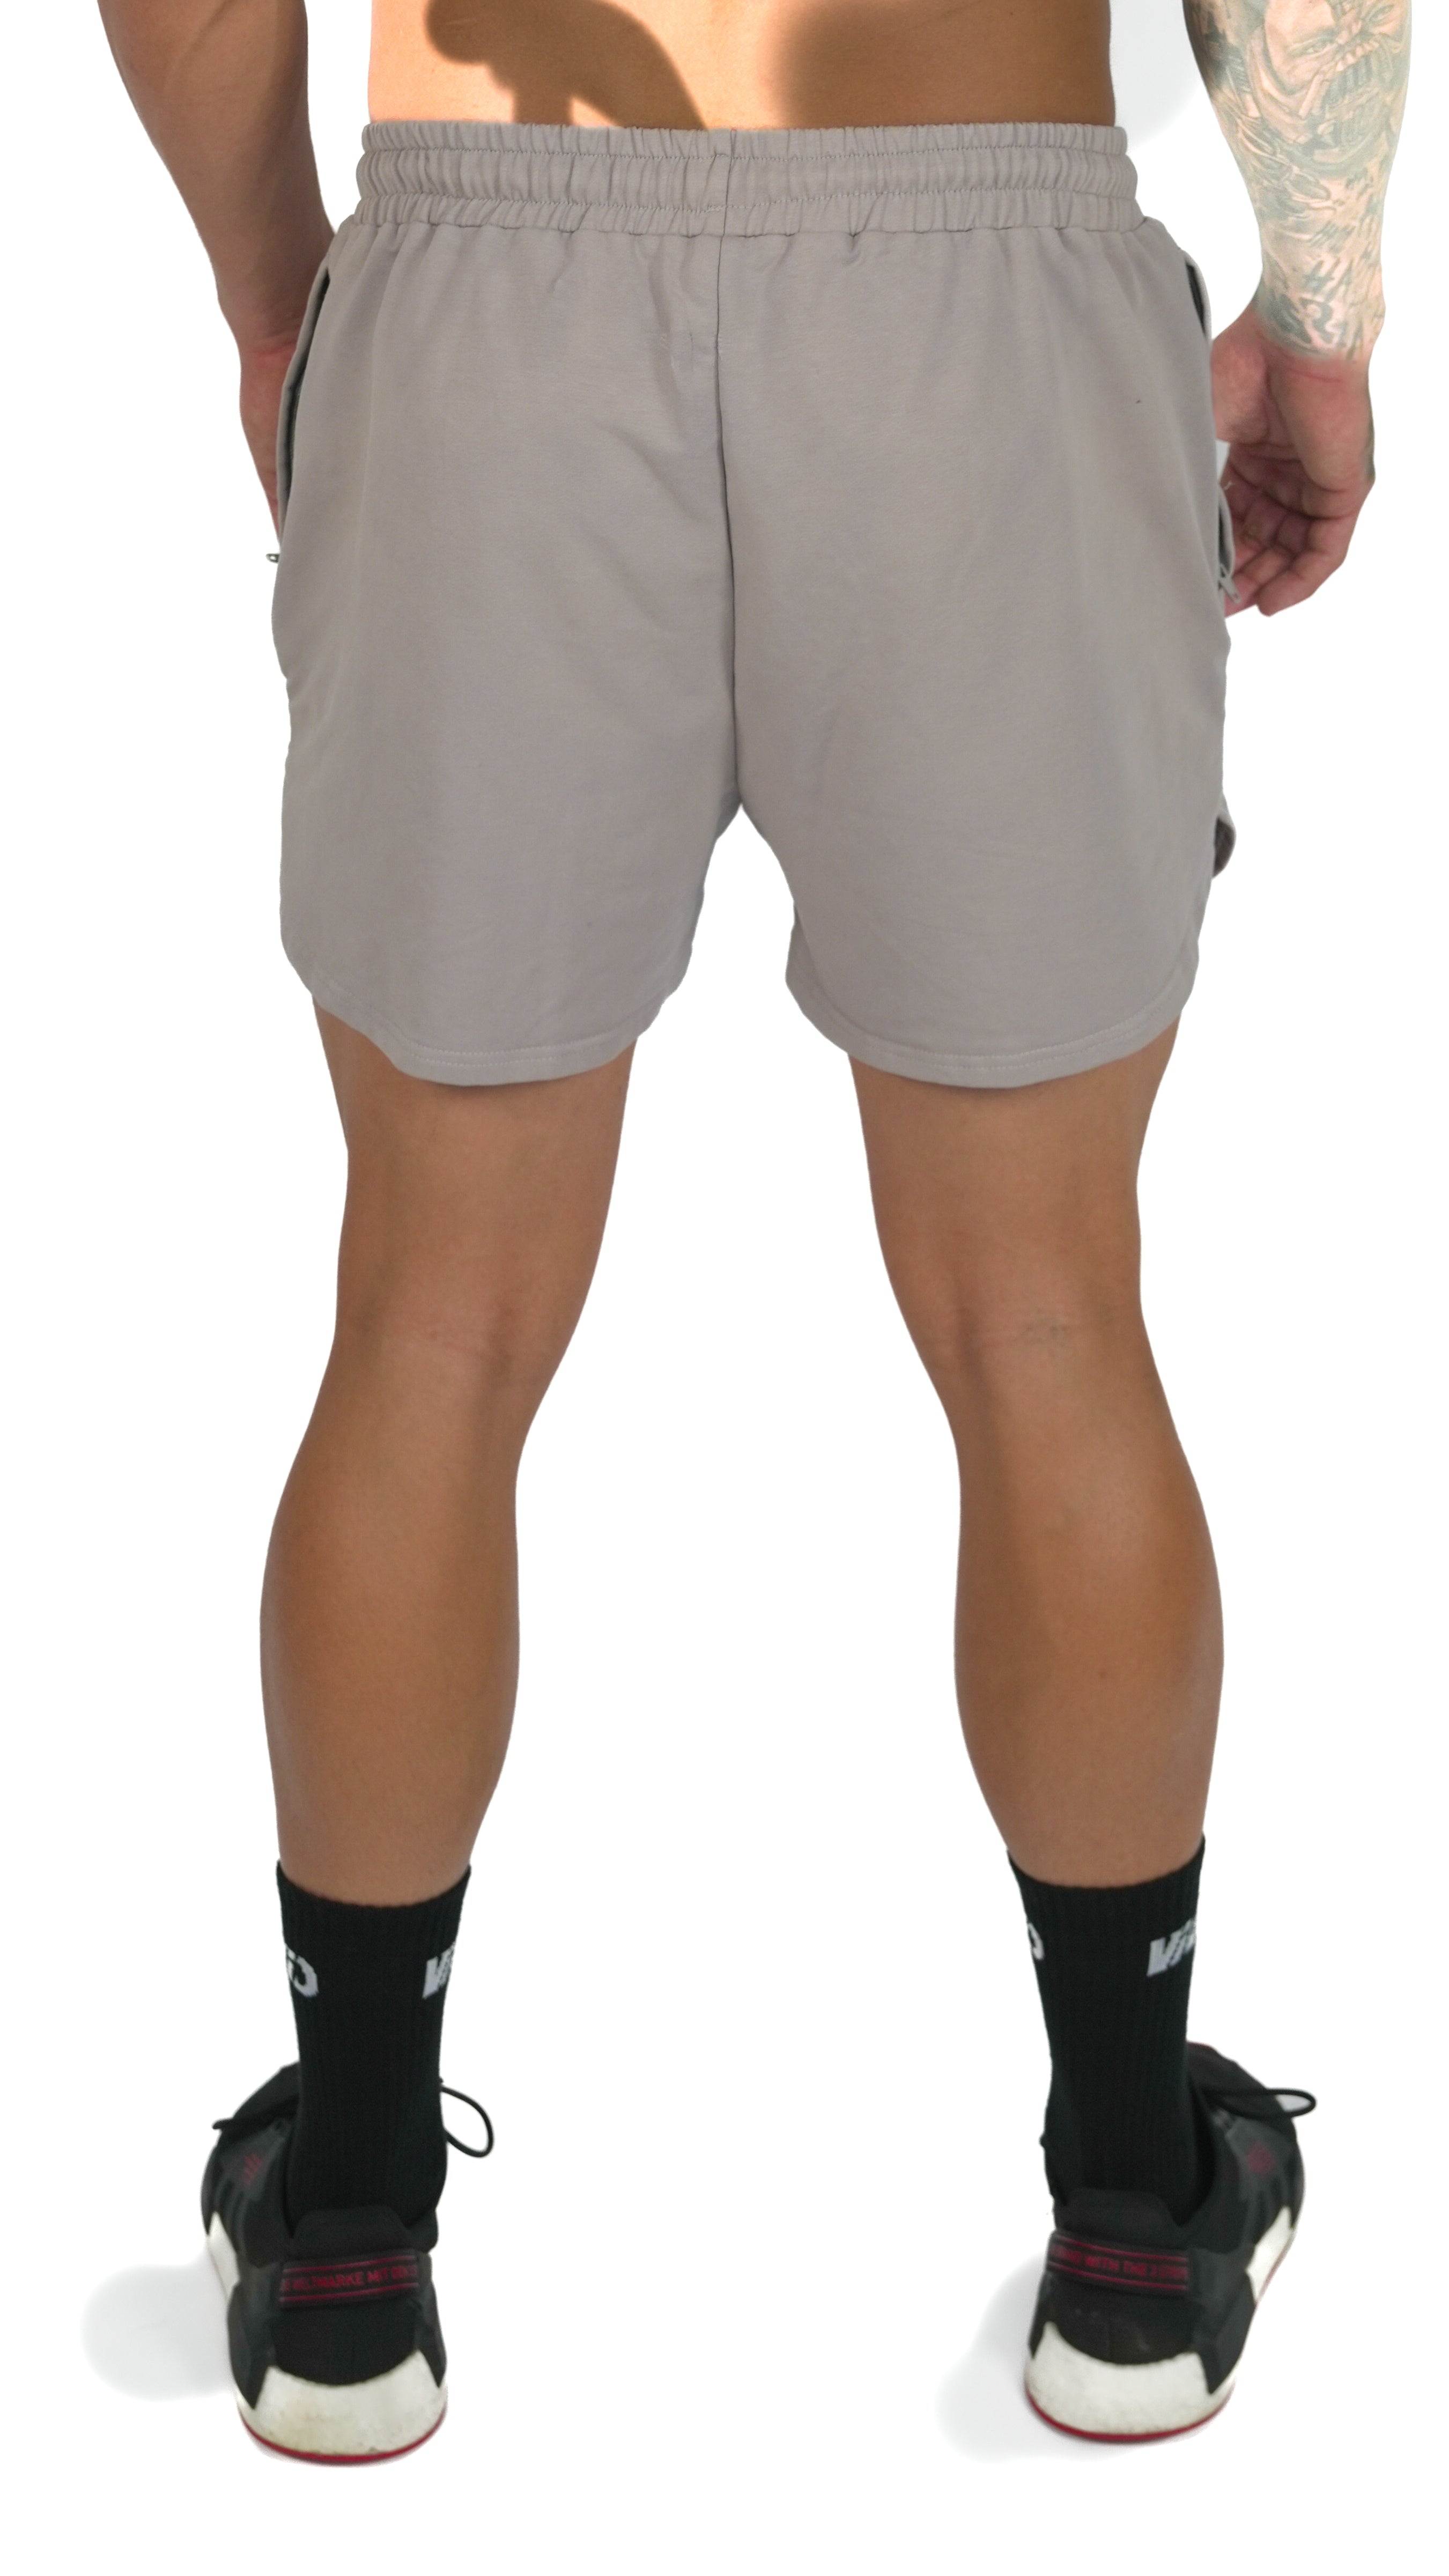 Quad Cut Shorts - Grey